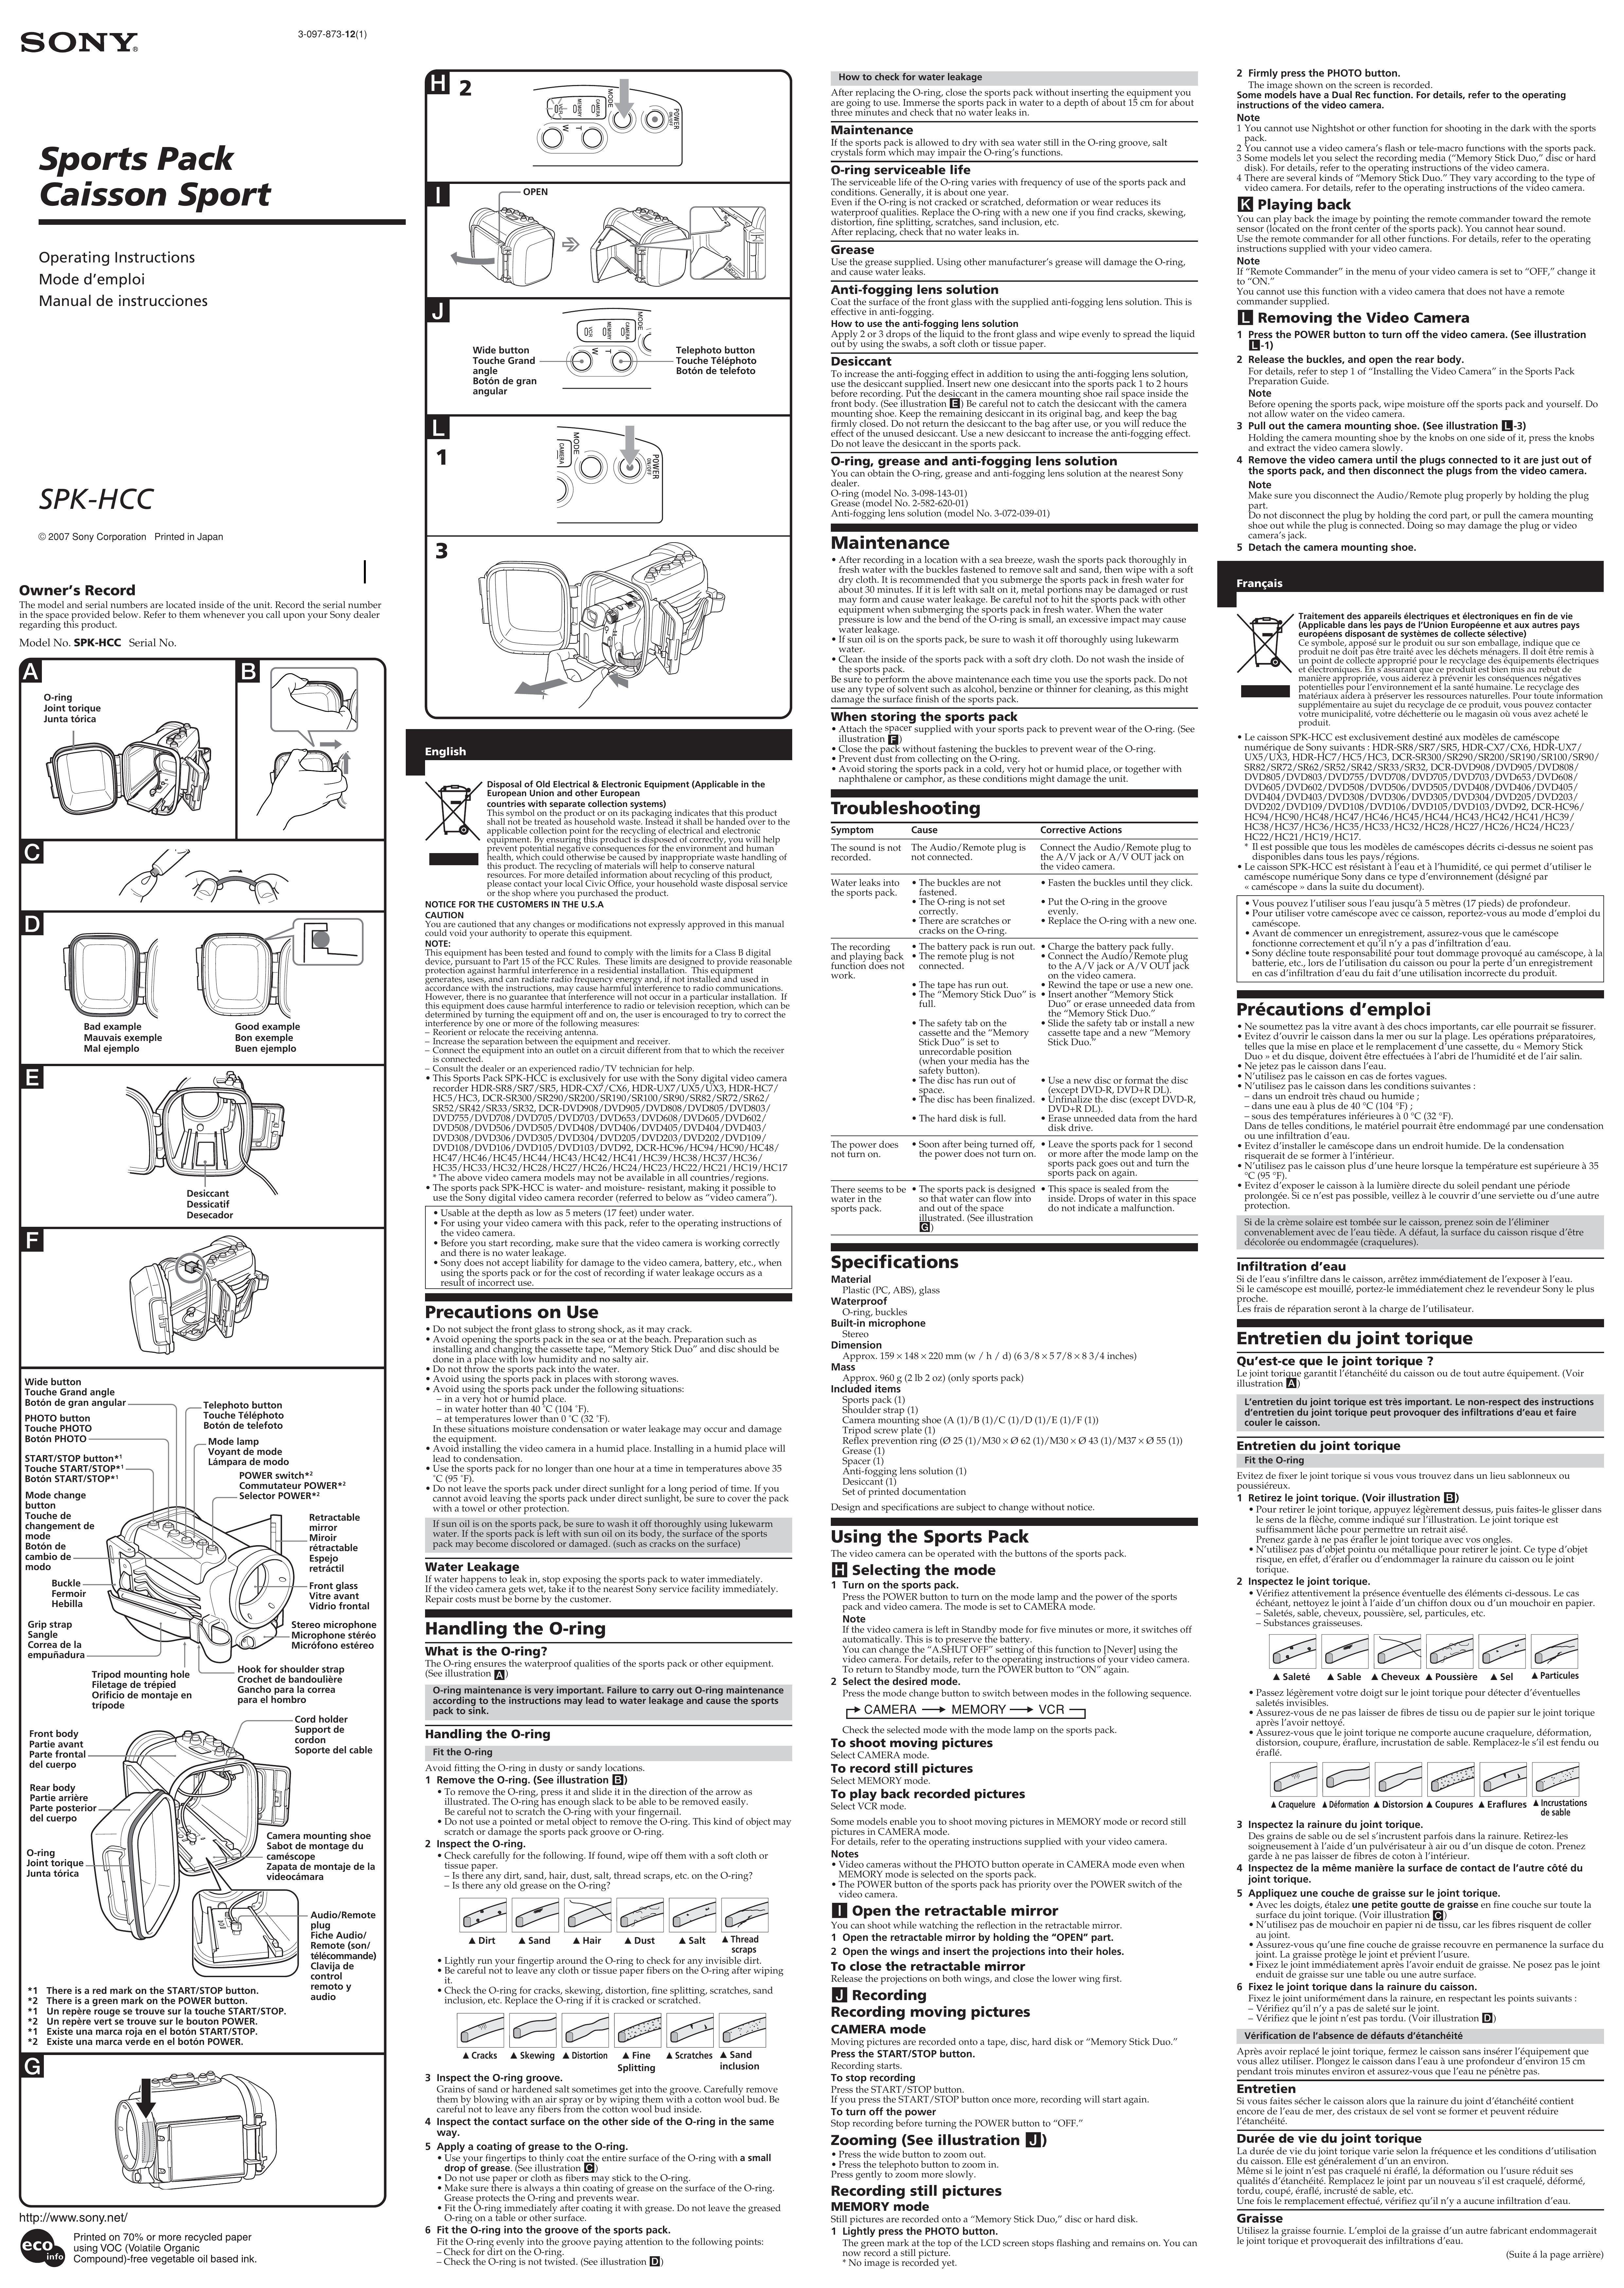 Sony SPK-HCC Camcorder Accessories User Manual